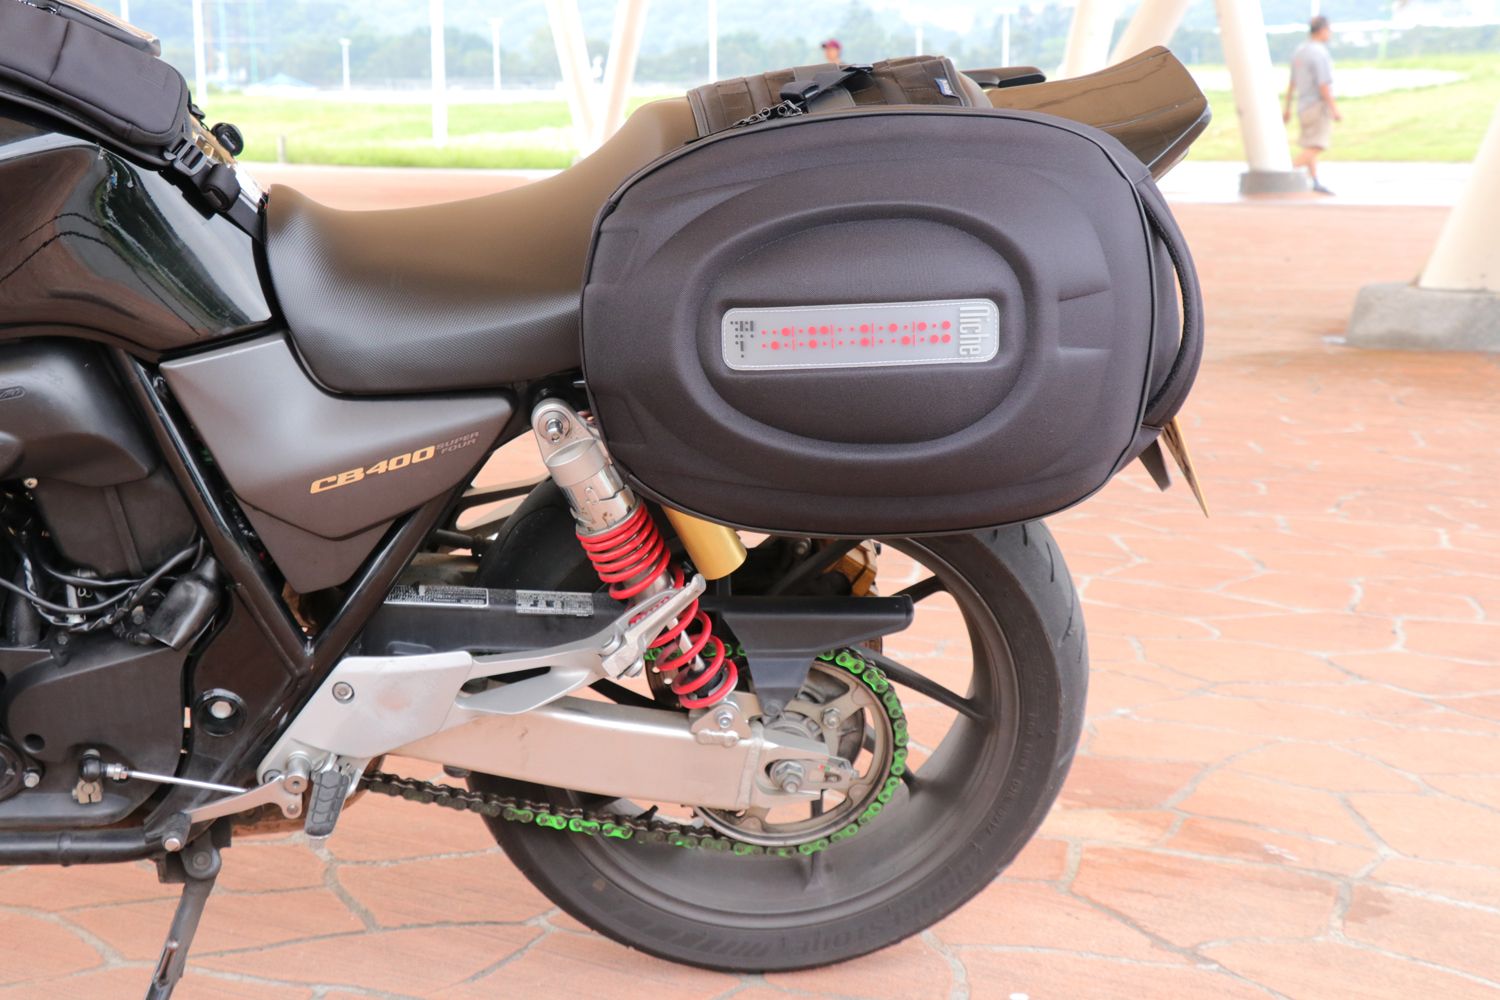 Niche Summit har fedeste, mest innovative
Motorcykel tasker, luaage, rygsække til motorcykelkørere